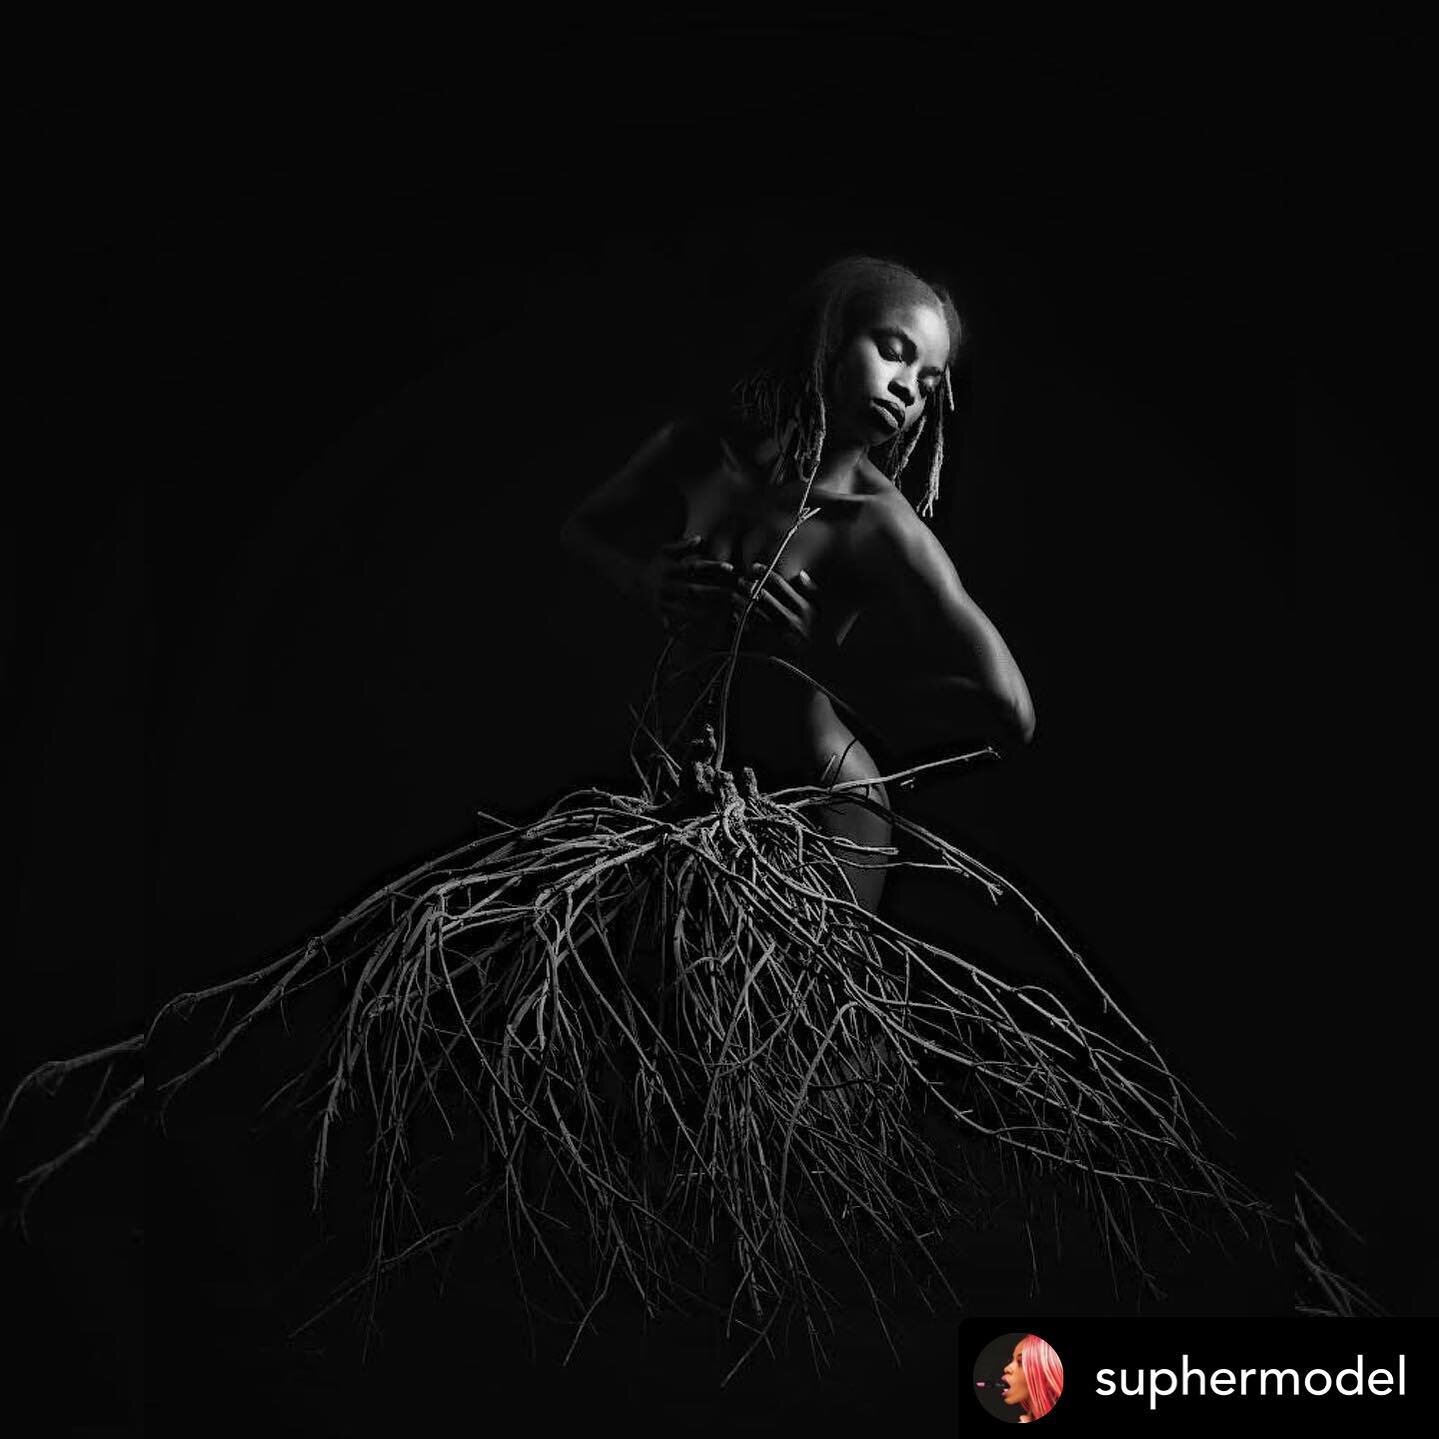 Amazing concept and execution! 

OP&bull; @suphermodel 🪡𝕊𝕙𝕖&rsquo;𝕤 𝕒 𝕟𝕖𝕖𝕕𝕝𝕖 𝕚𝕟 𝕒 𝕙𝕒𝕪𝕤𝕥𝕒𝕔𝕜

Model: @suphermodel 
Photographer: @modelsonview 
Studio: @shapeshift.rentalstudio 

#ChameleonCooper #supHERmodel #modellife #losangel